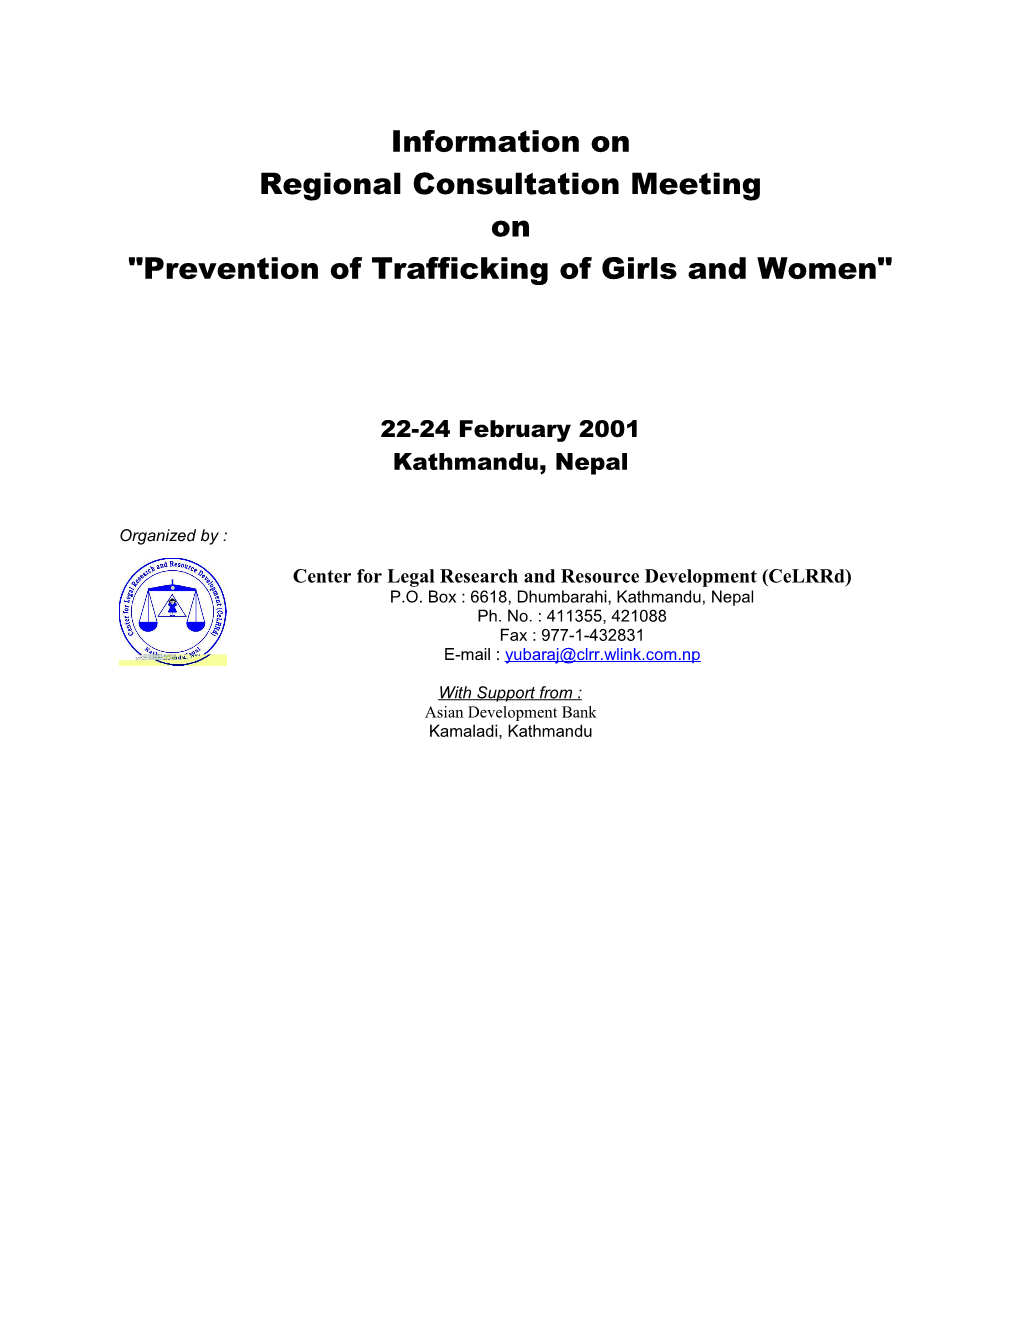 Regional Consultation Meeting On